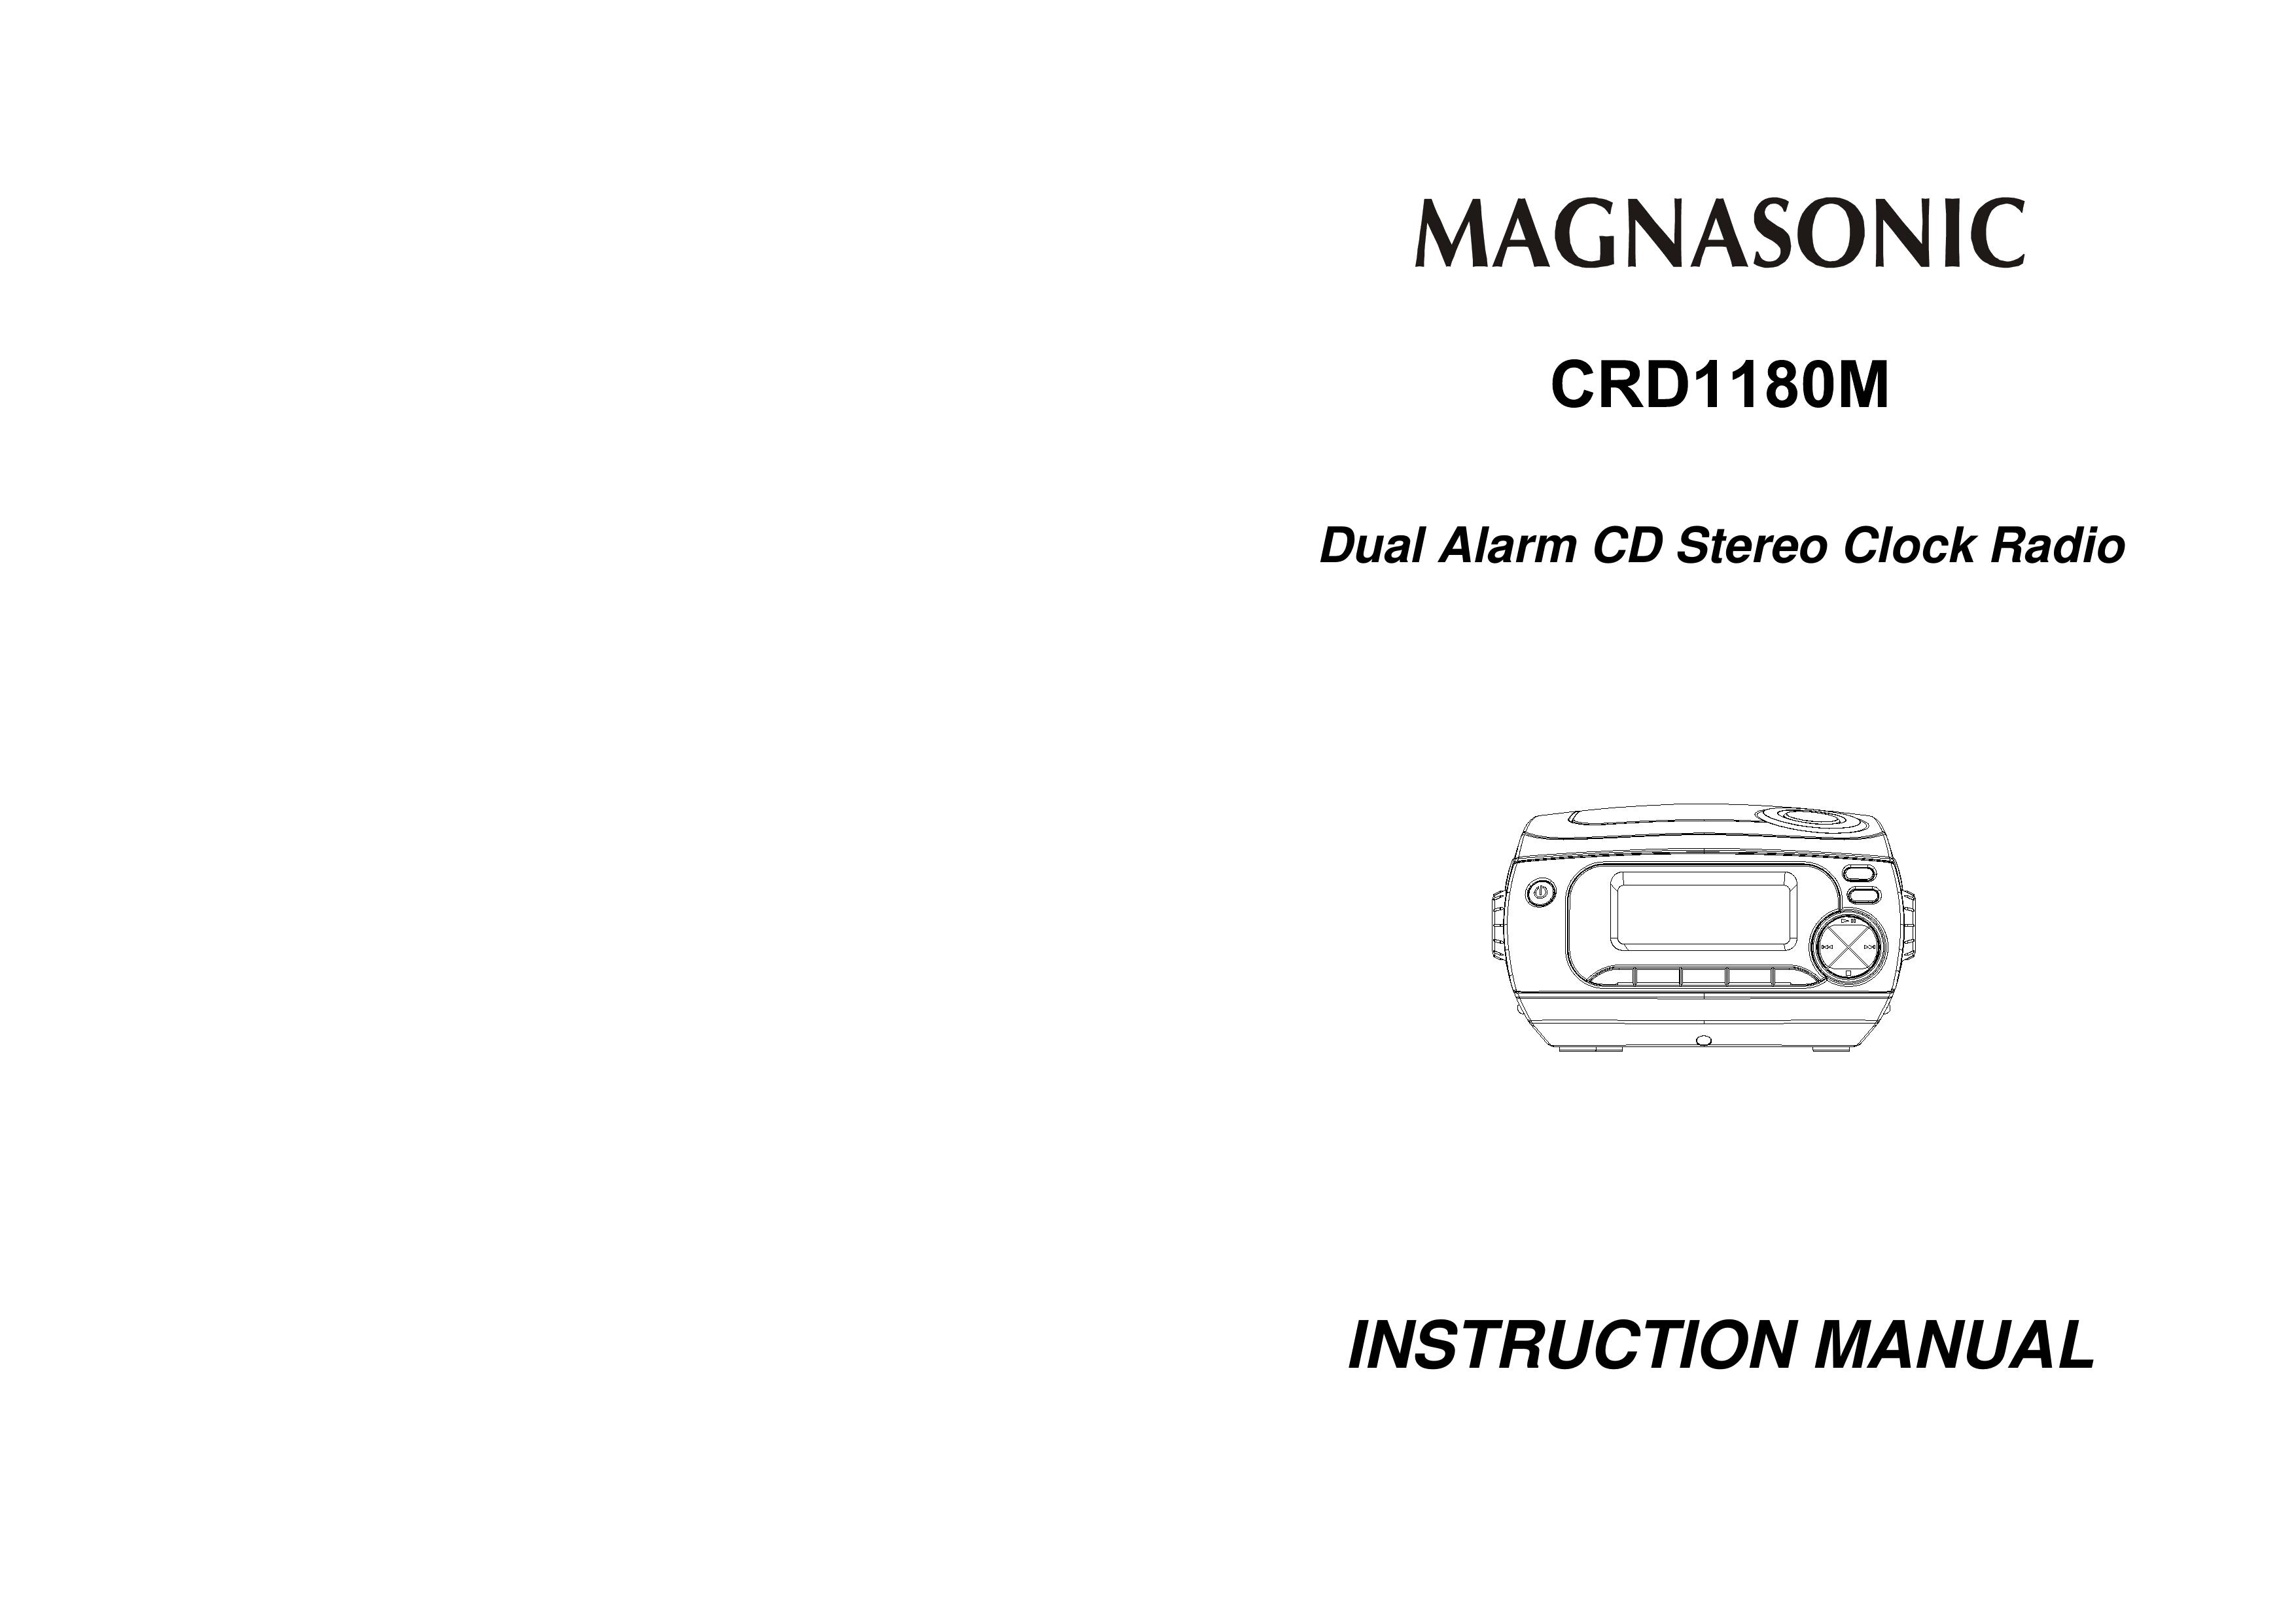 Magnasonic CRD1180M Clock Radio User Manual